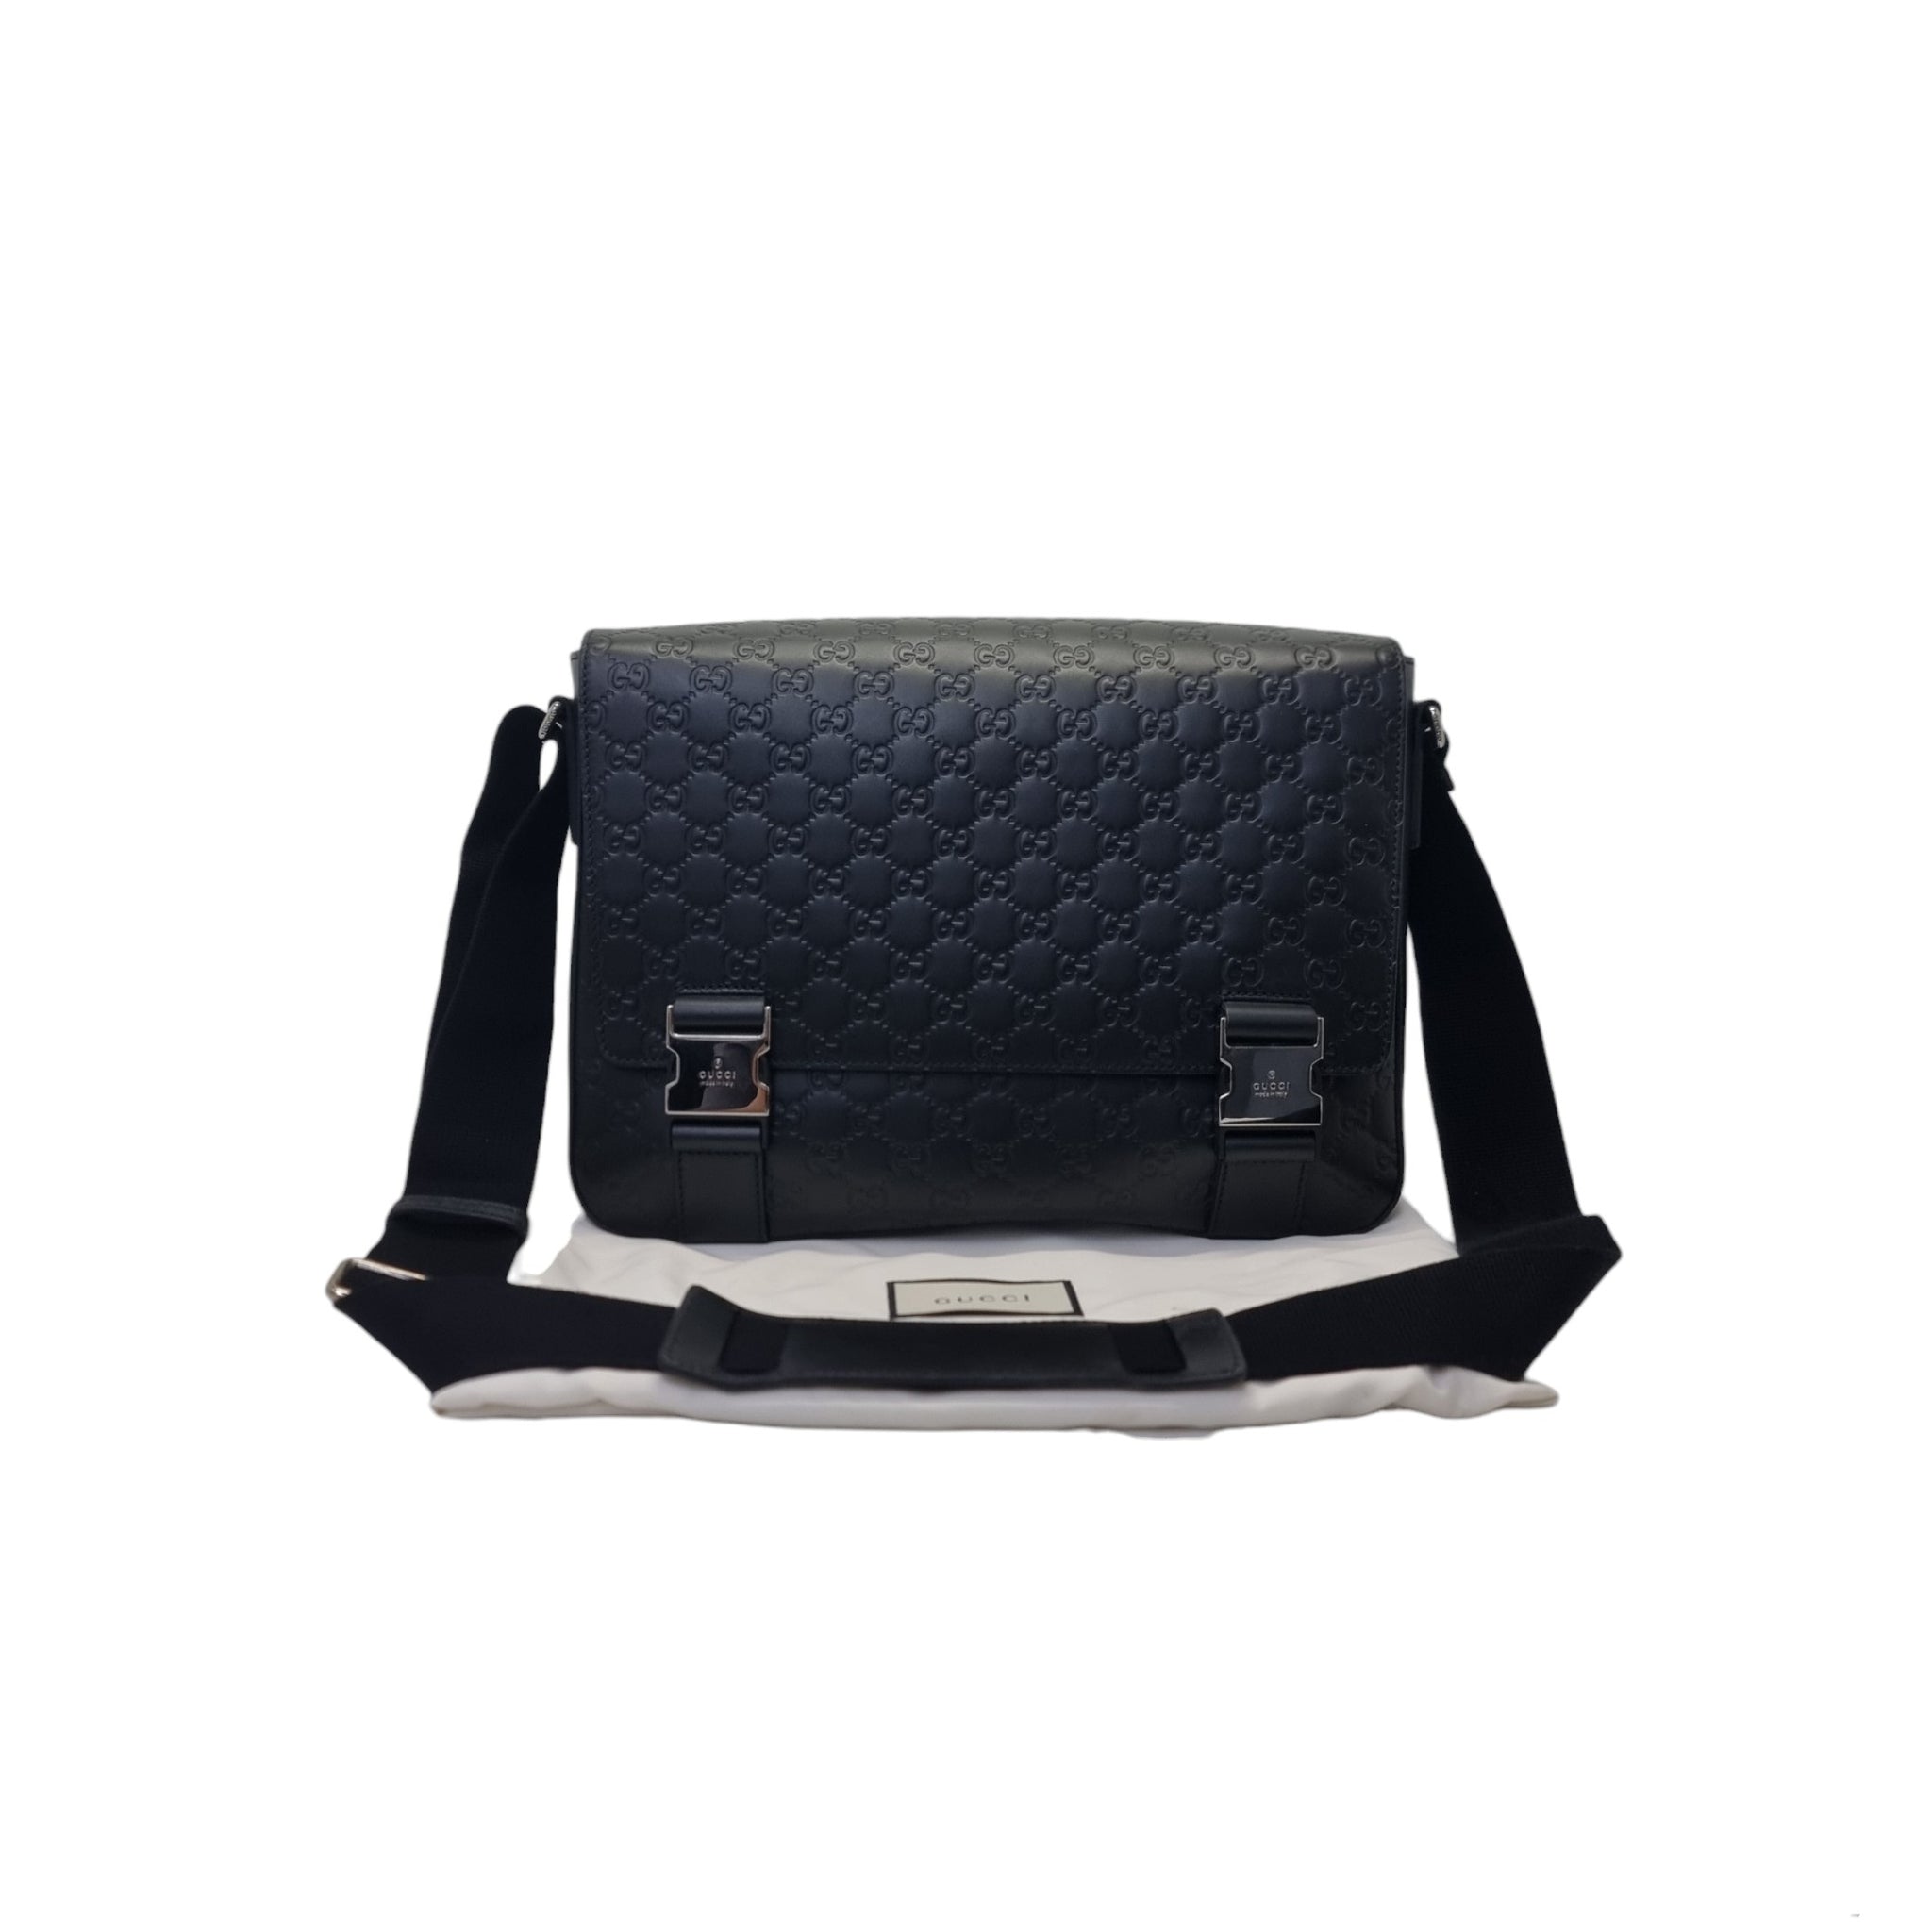 Gucci Signature Leather Messenger Bag Shw (Black)